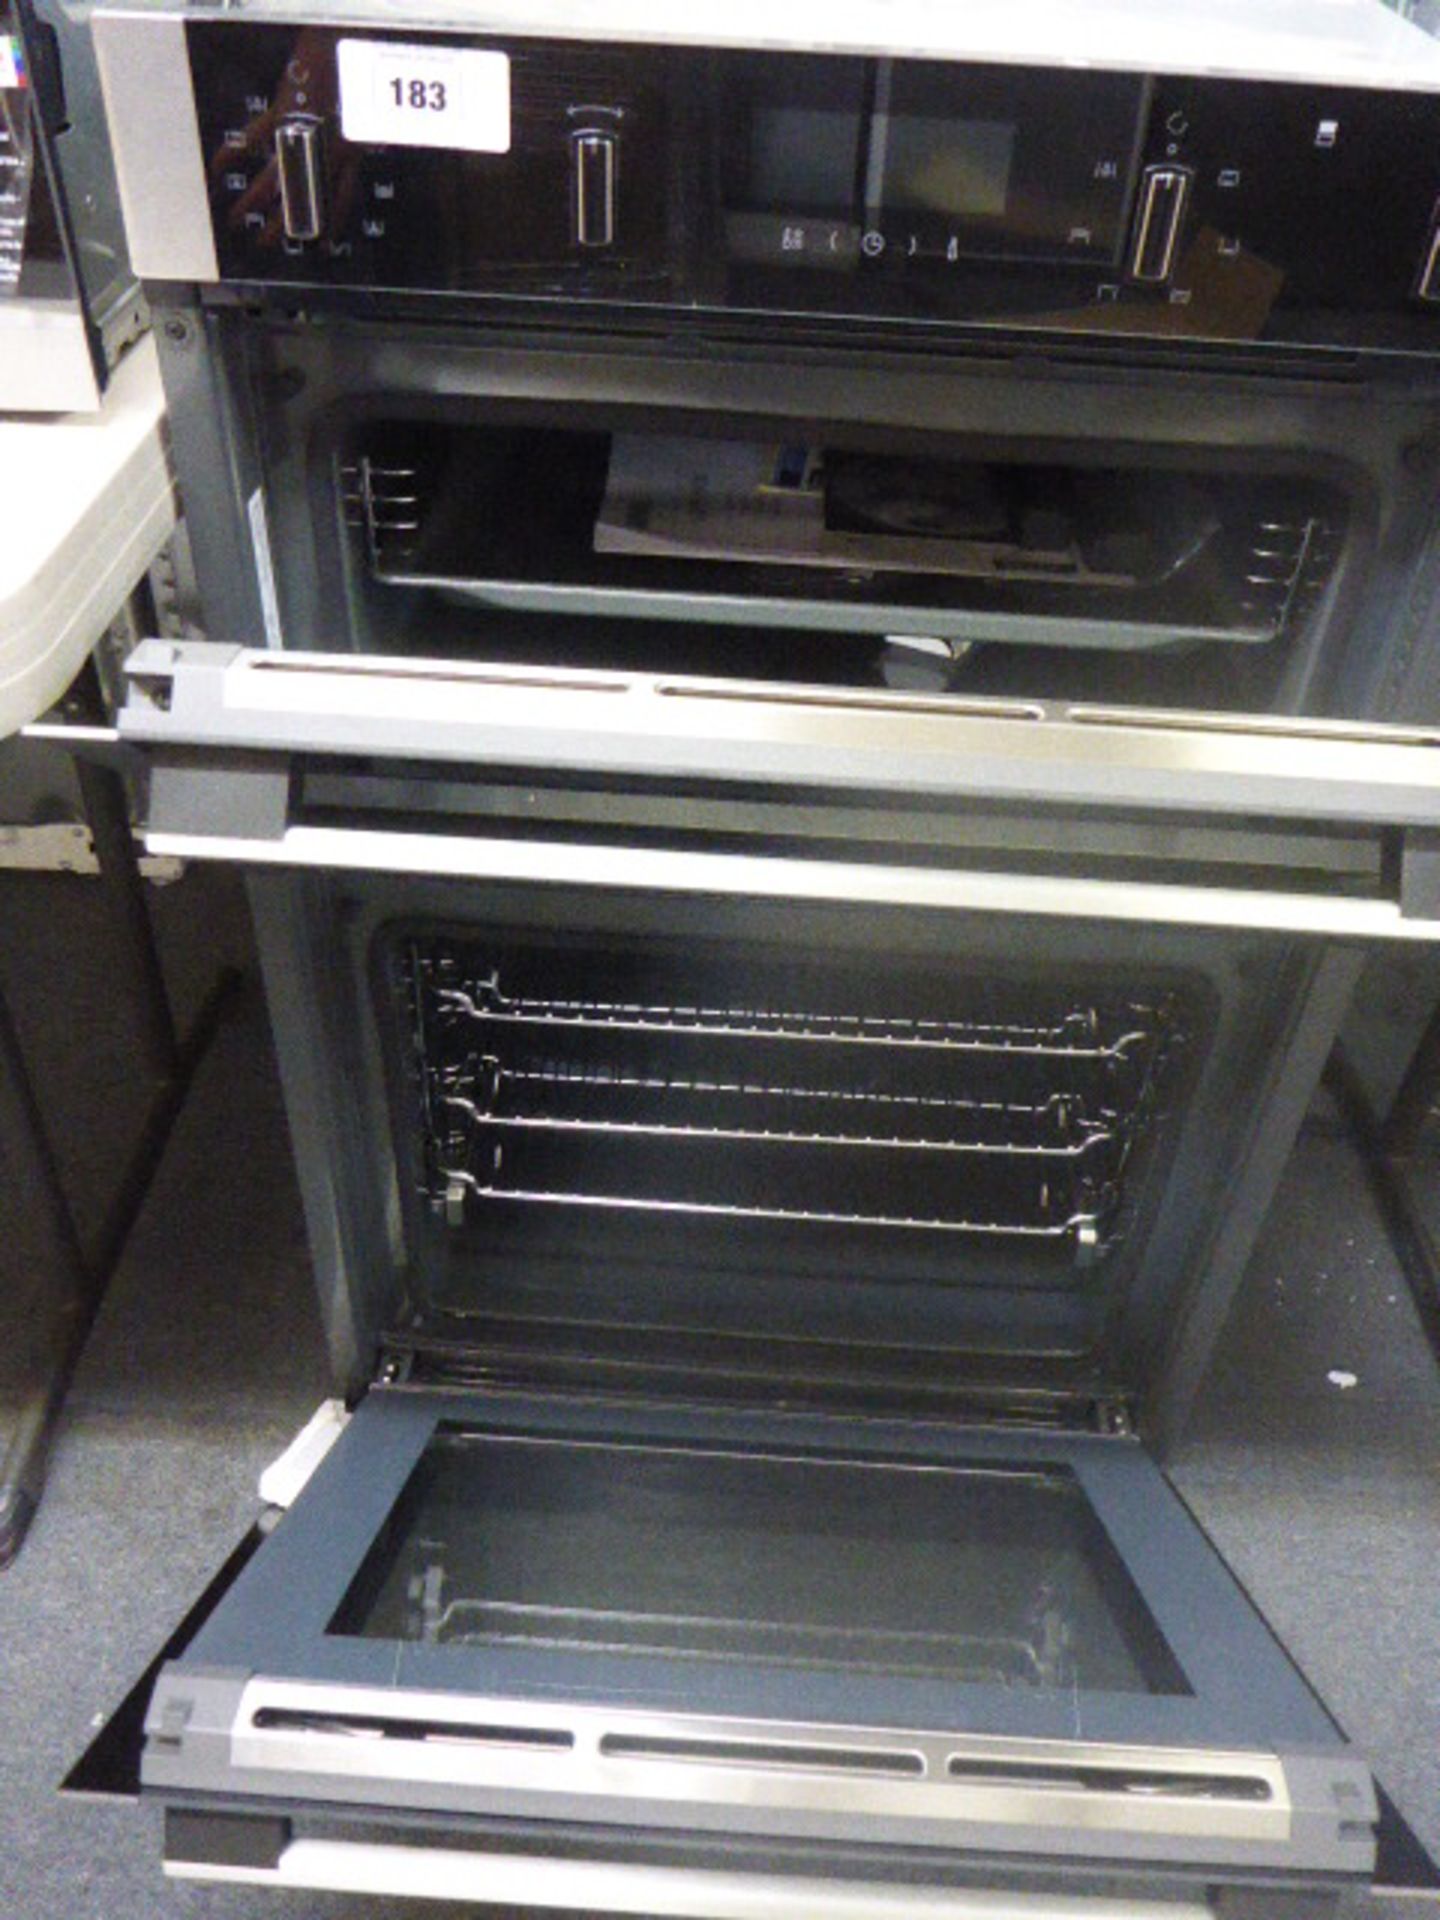 U2ACM7HN0BB Neff Double oven - Image 2 of 2